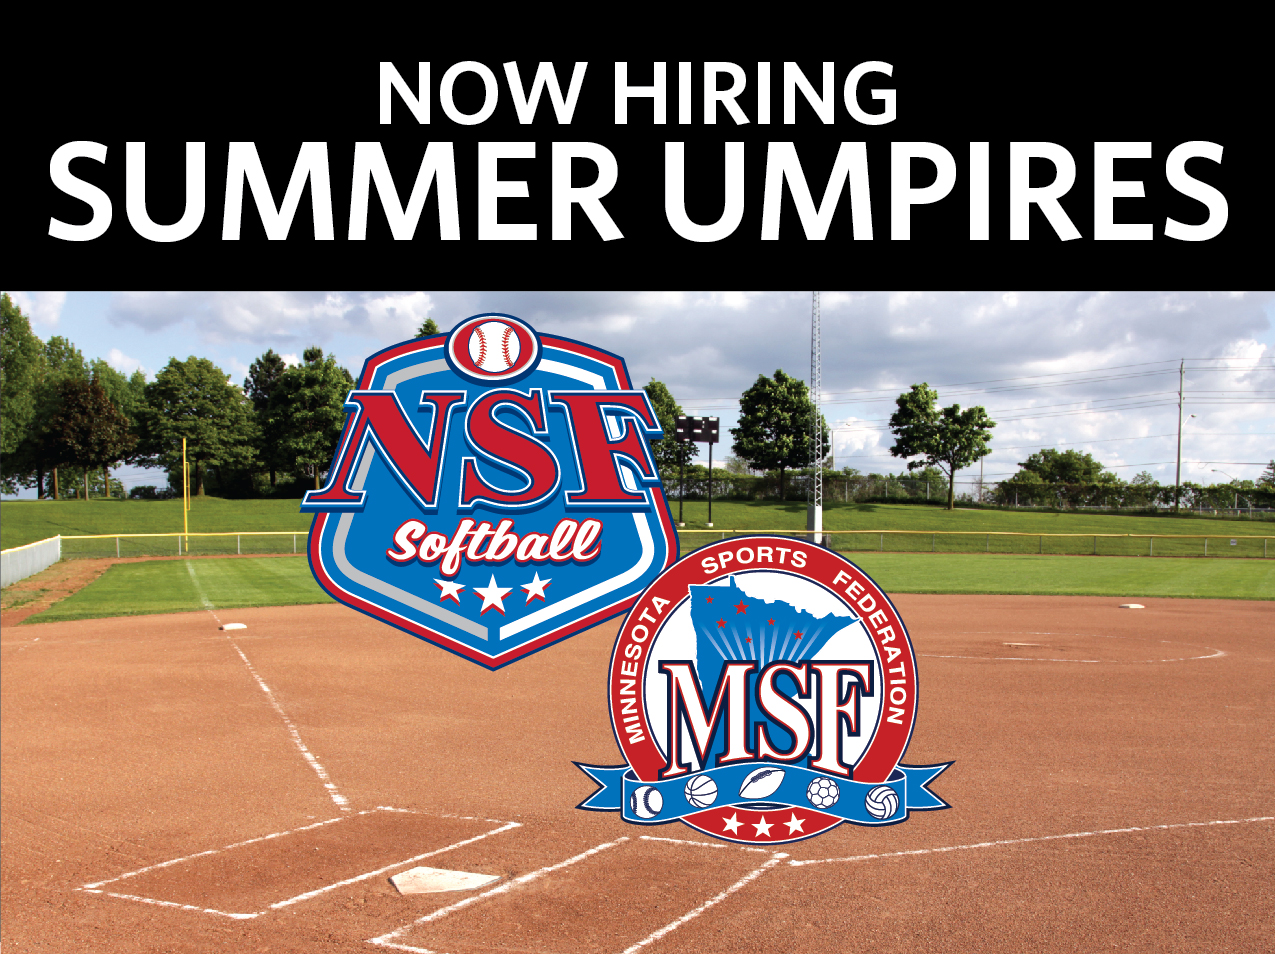 Now hiring summer umpires!